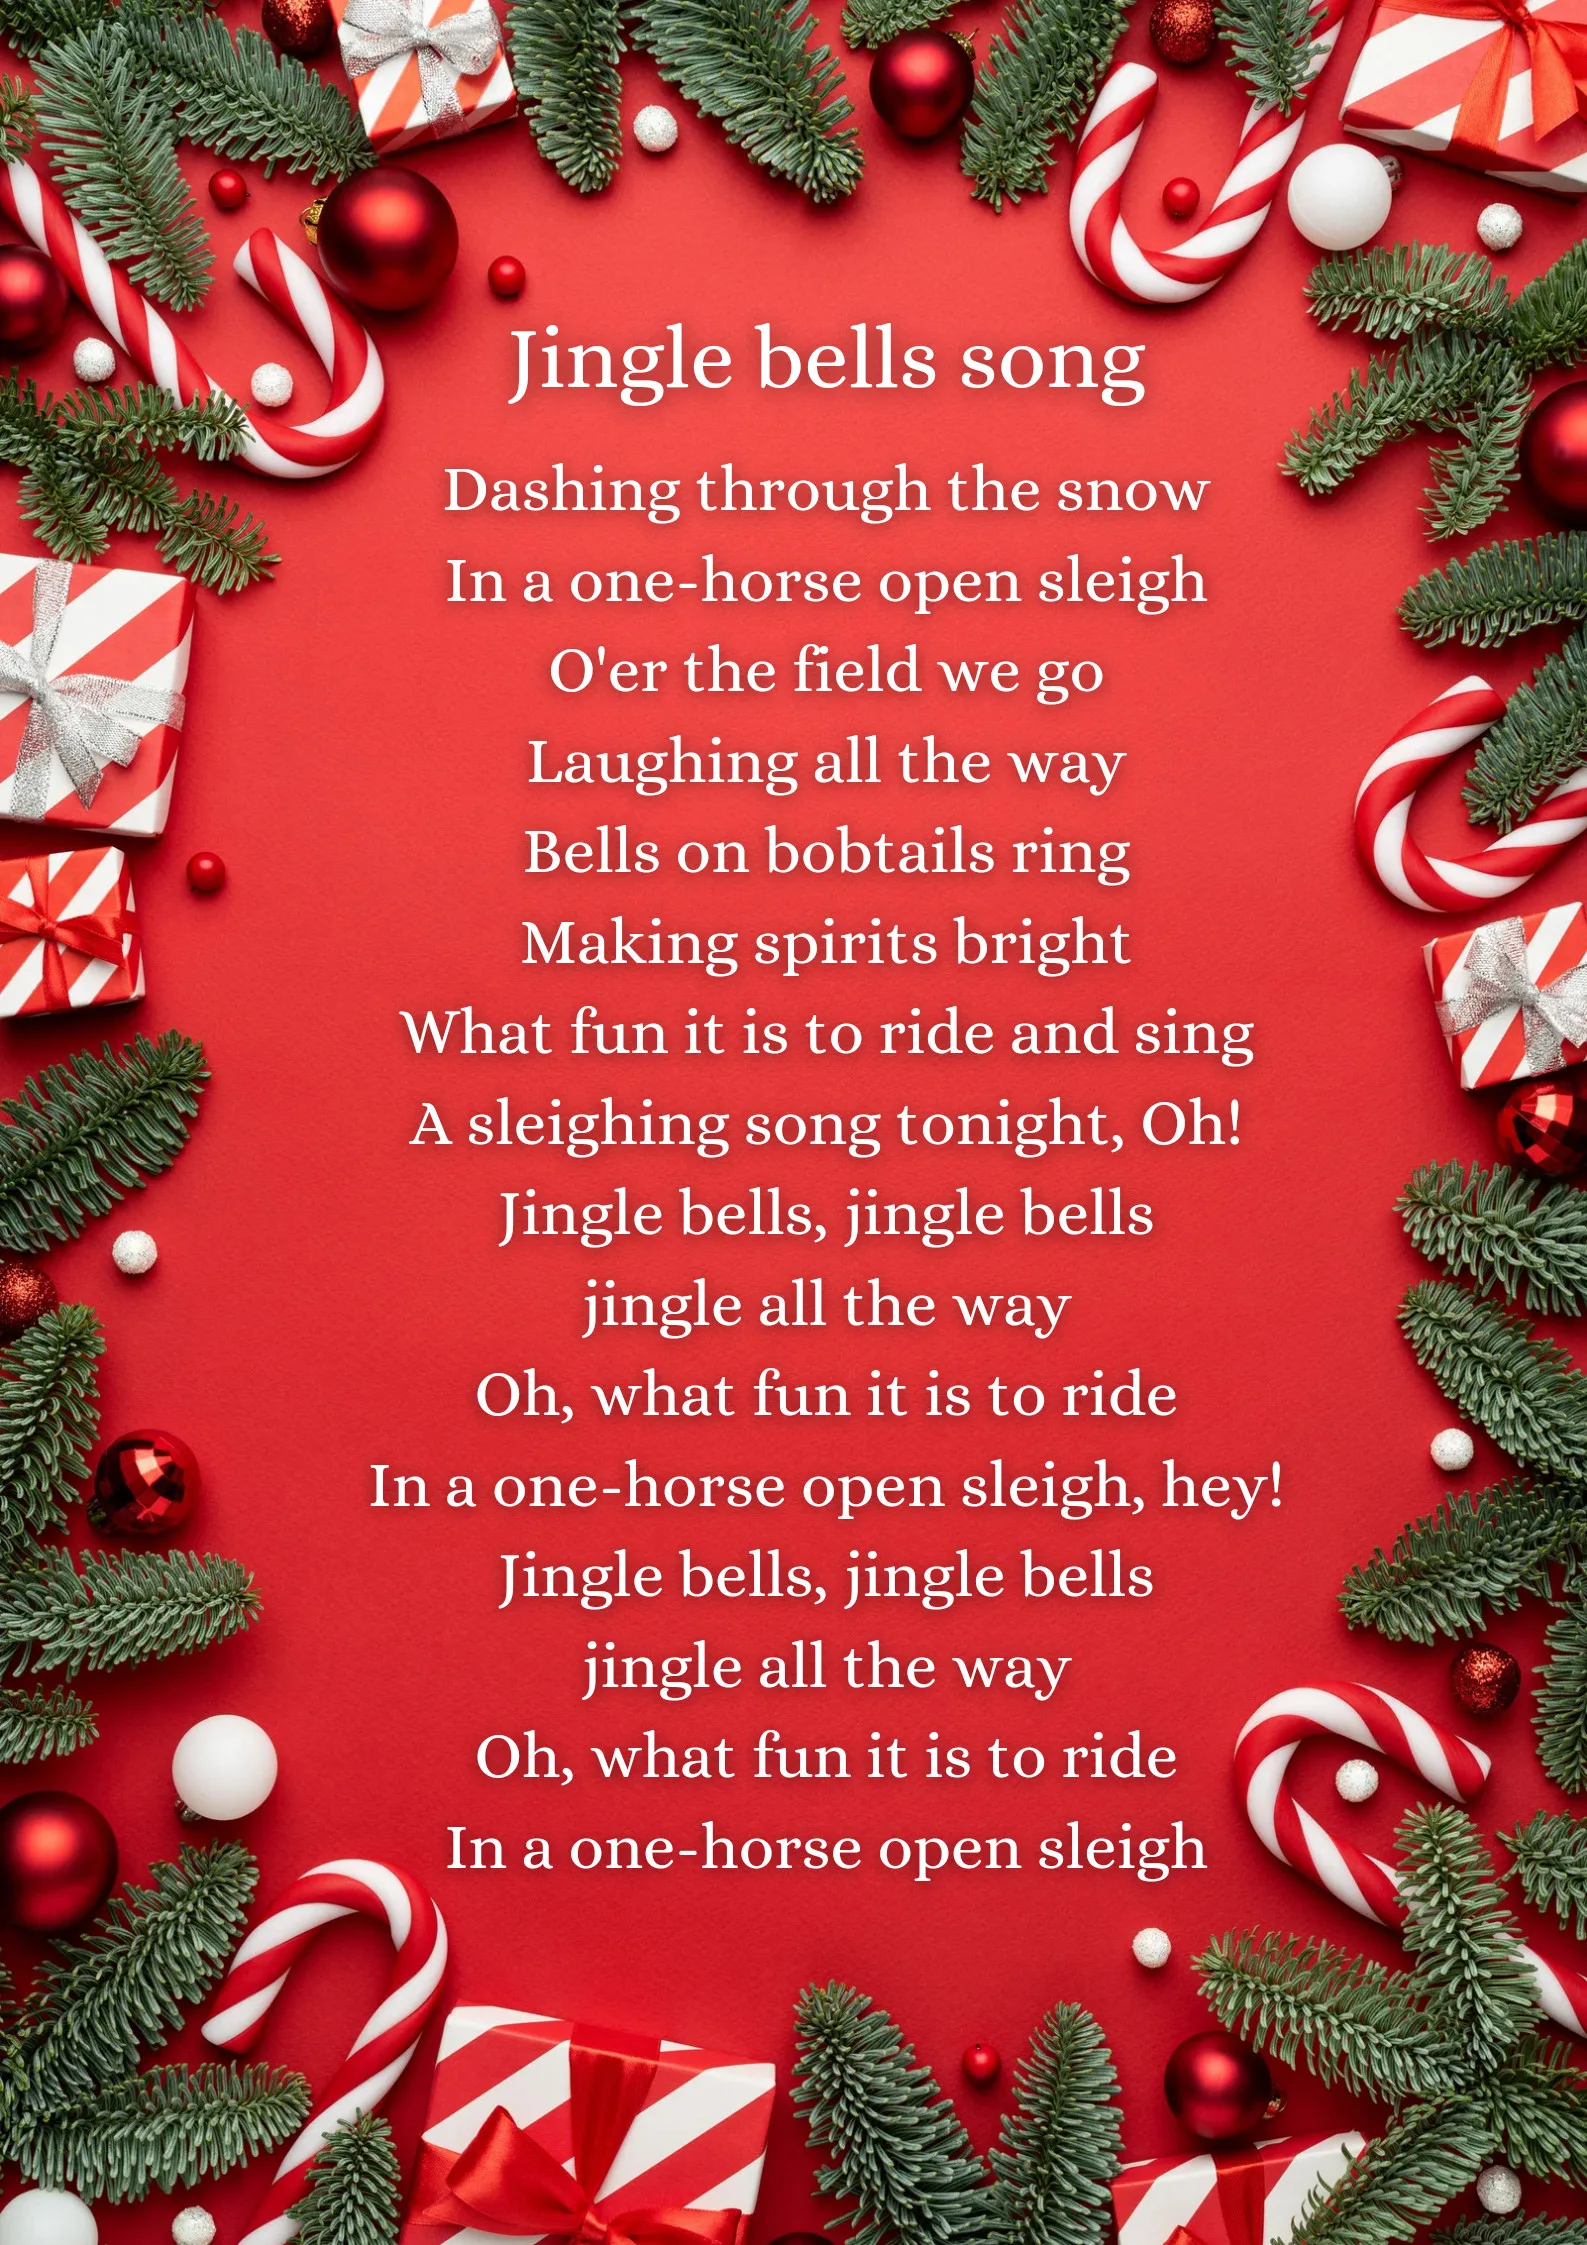 Happy Christmas Images 2023 /image of jingle bells song lyrics